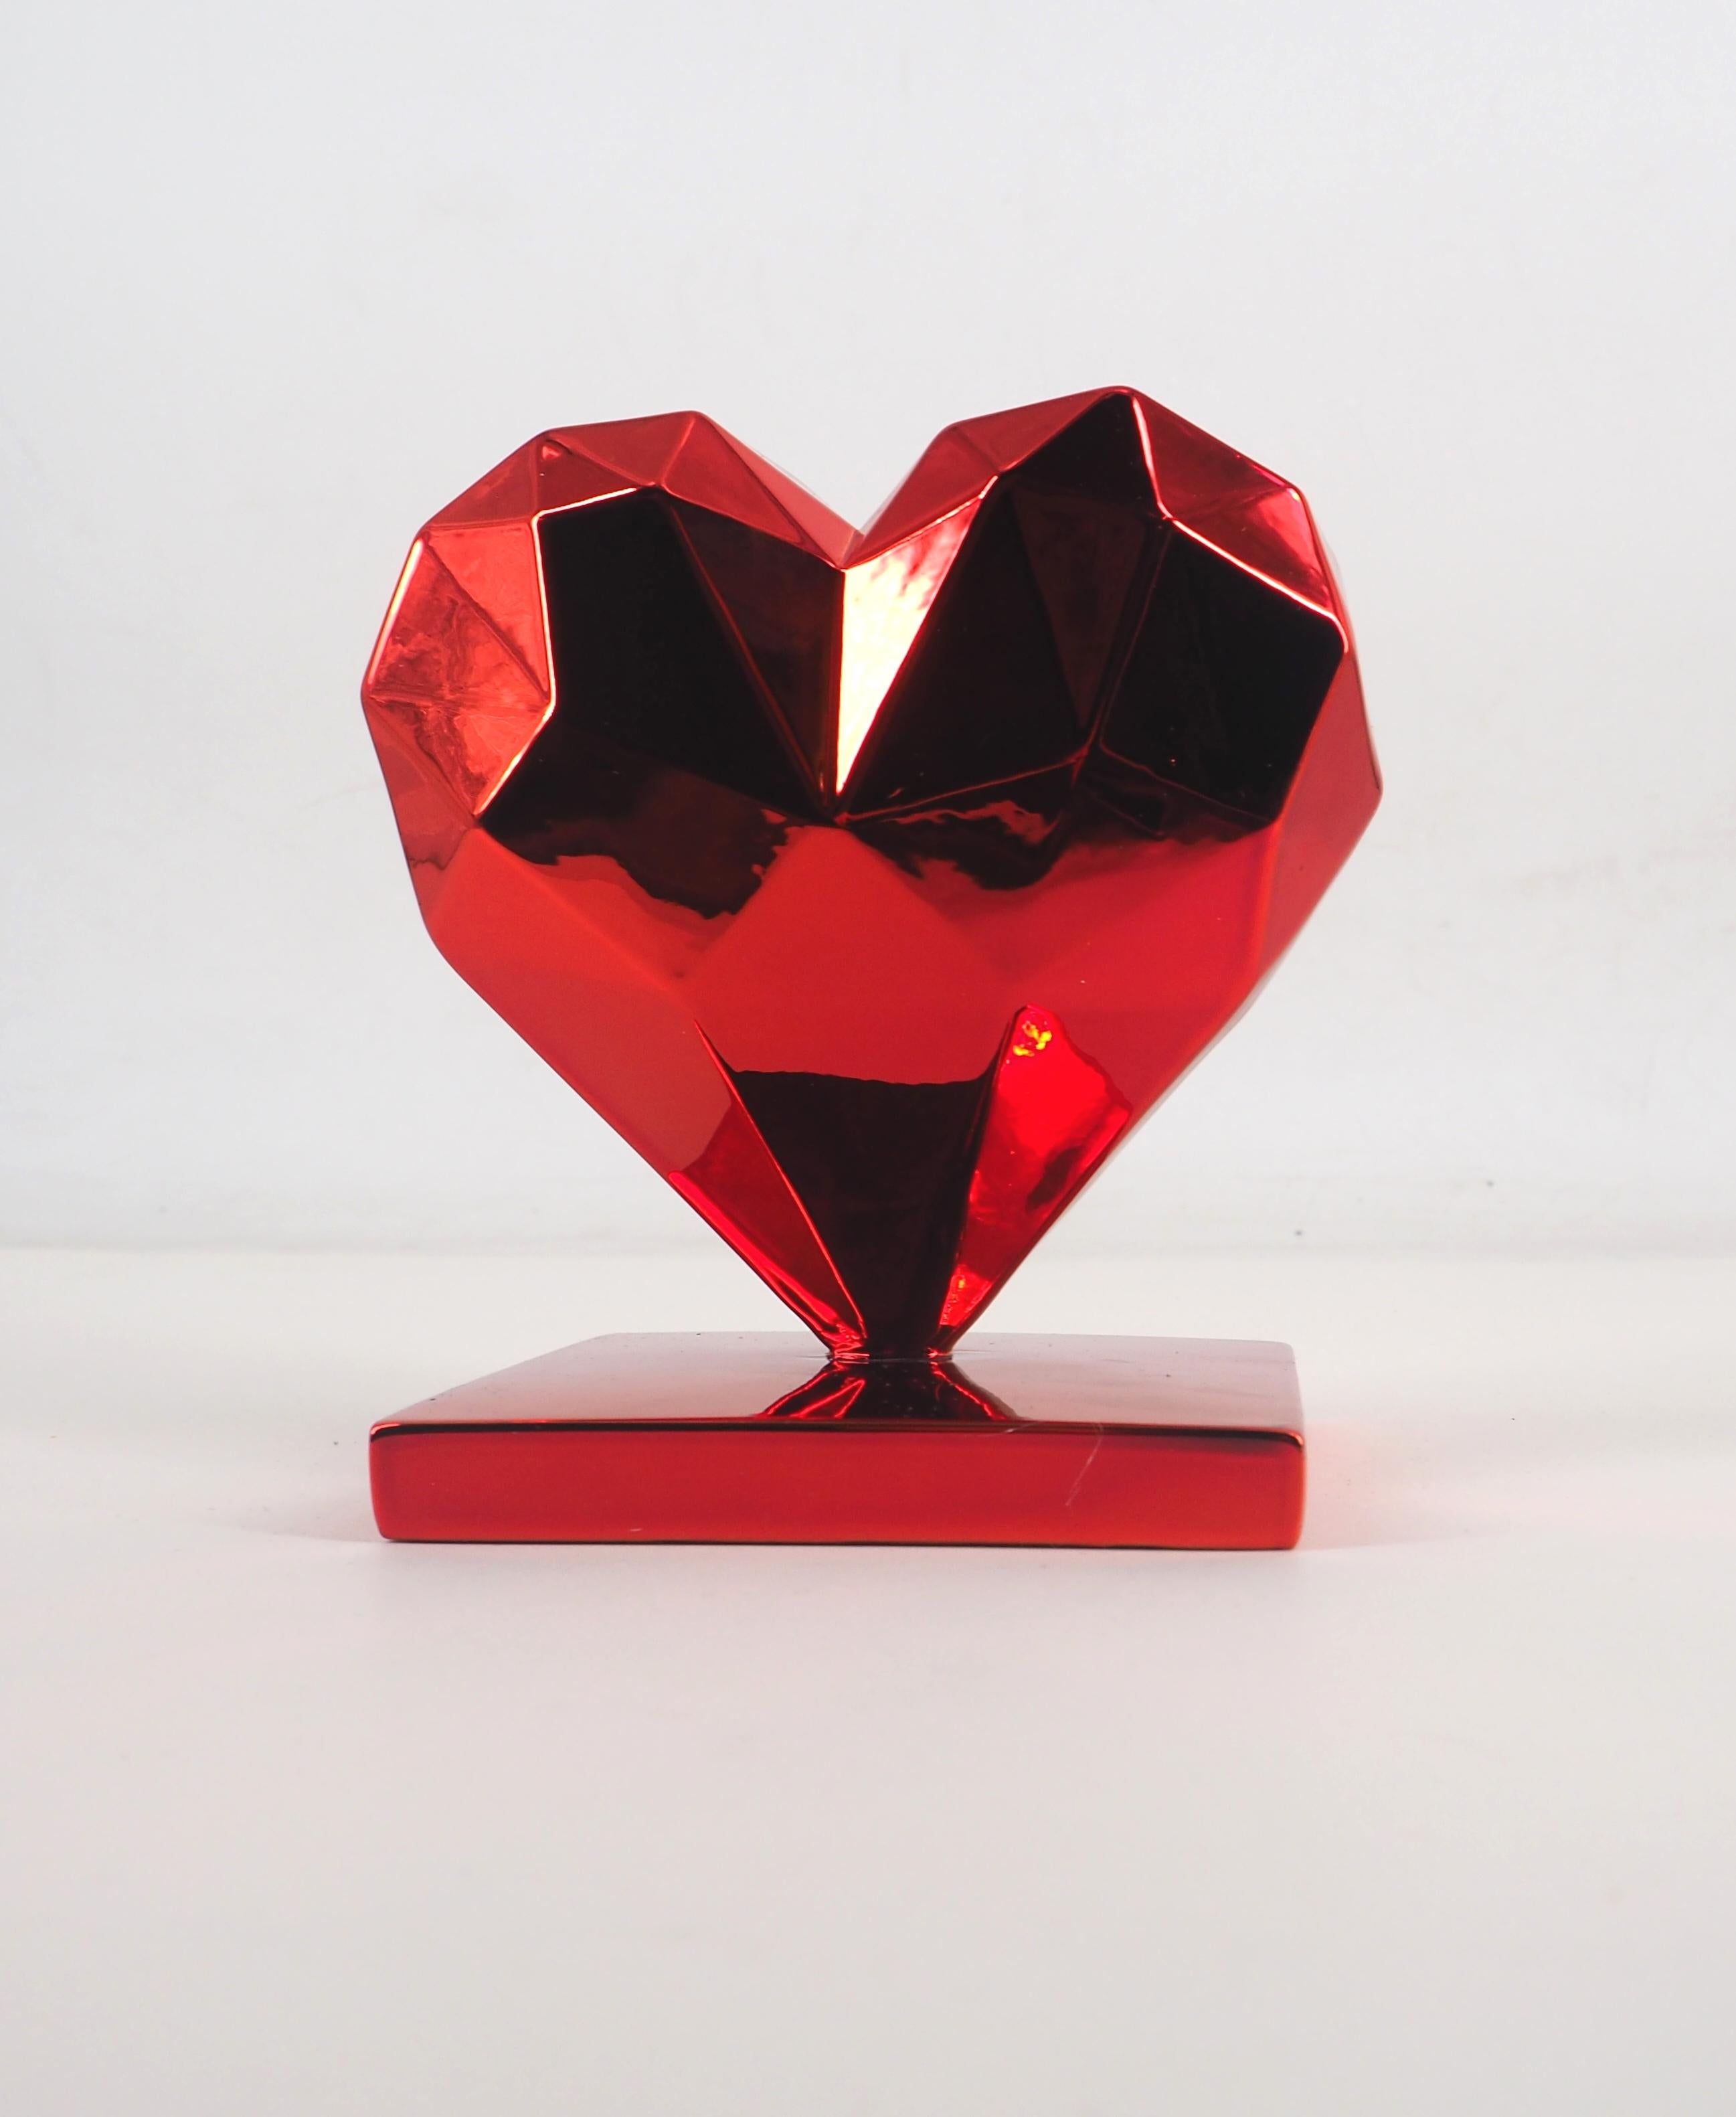 Richard Orlinski Figurative Sculpture - Heart Spirit (Red Edition) - Sculpture in original box with artist certificate